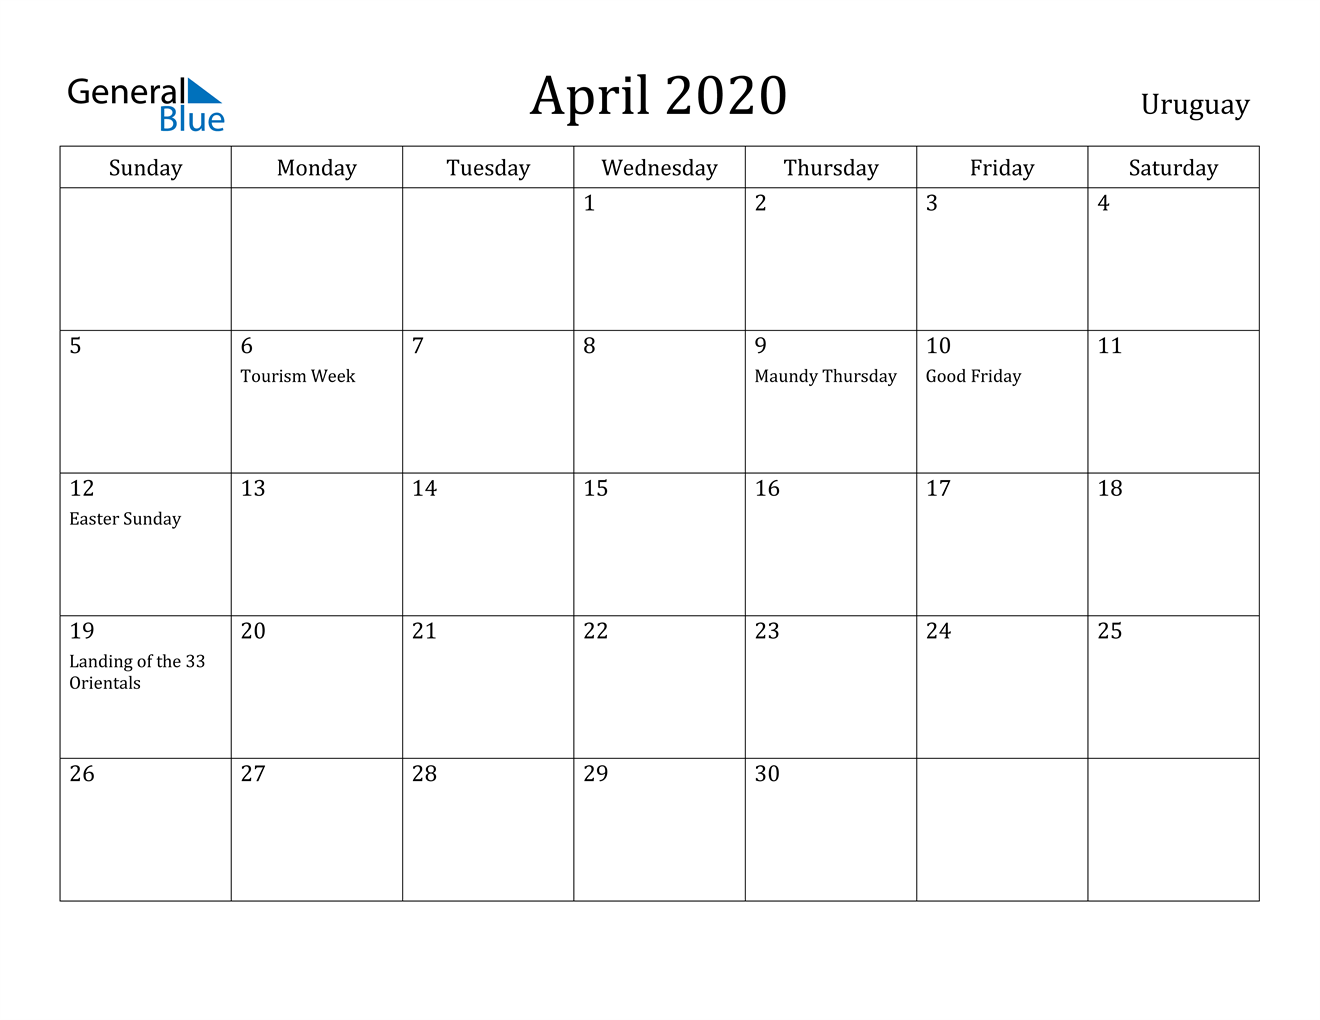 April 2020 Calendar - Uruguay